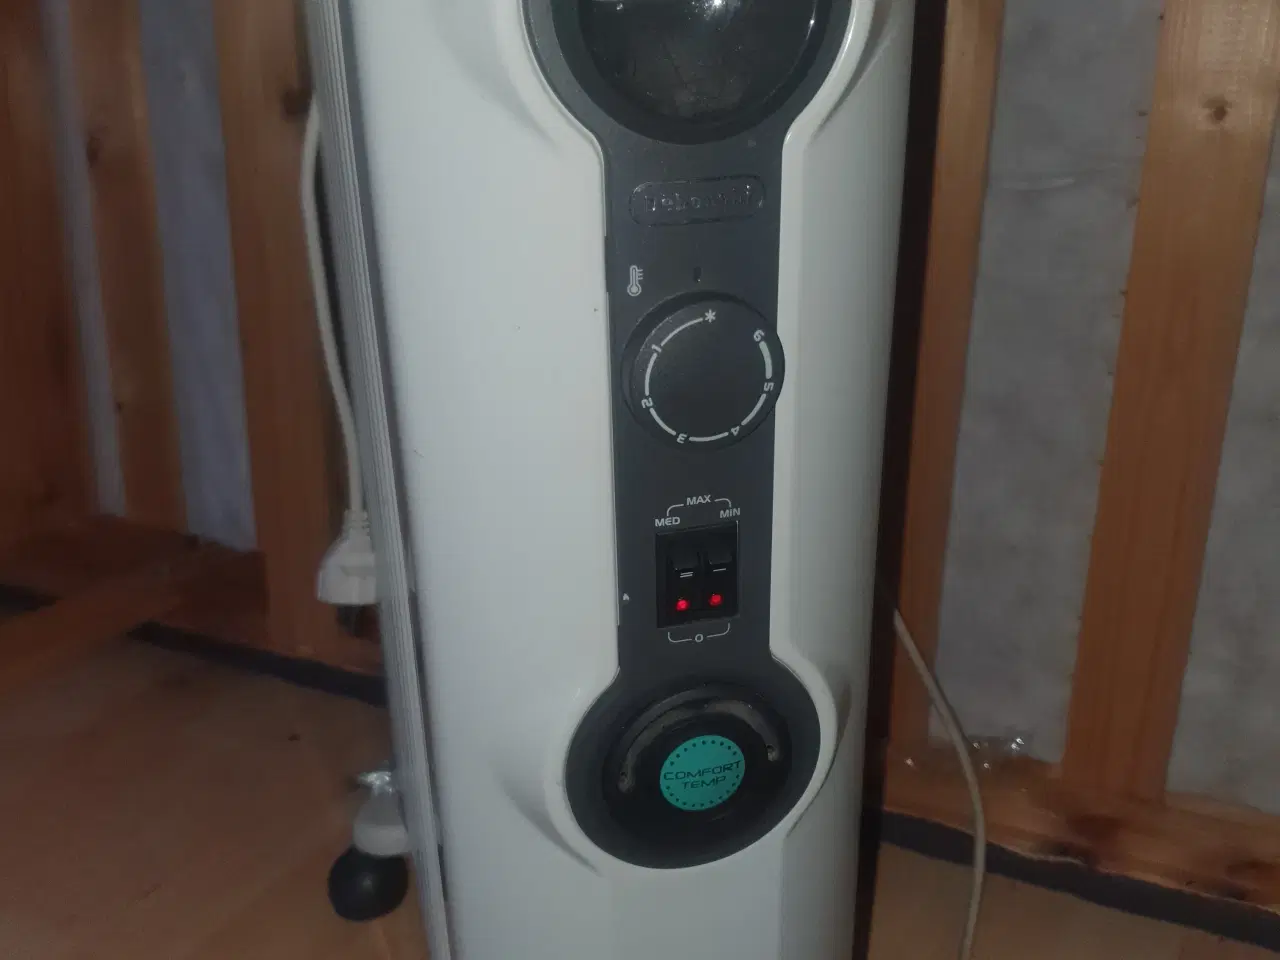 Billede 2 - El radiator